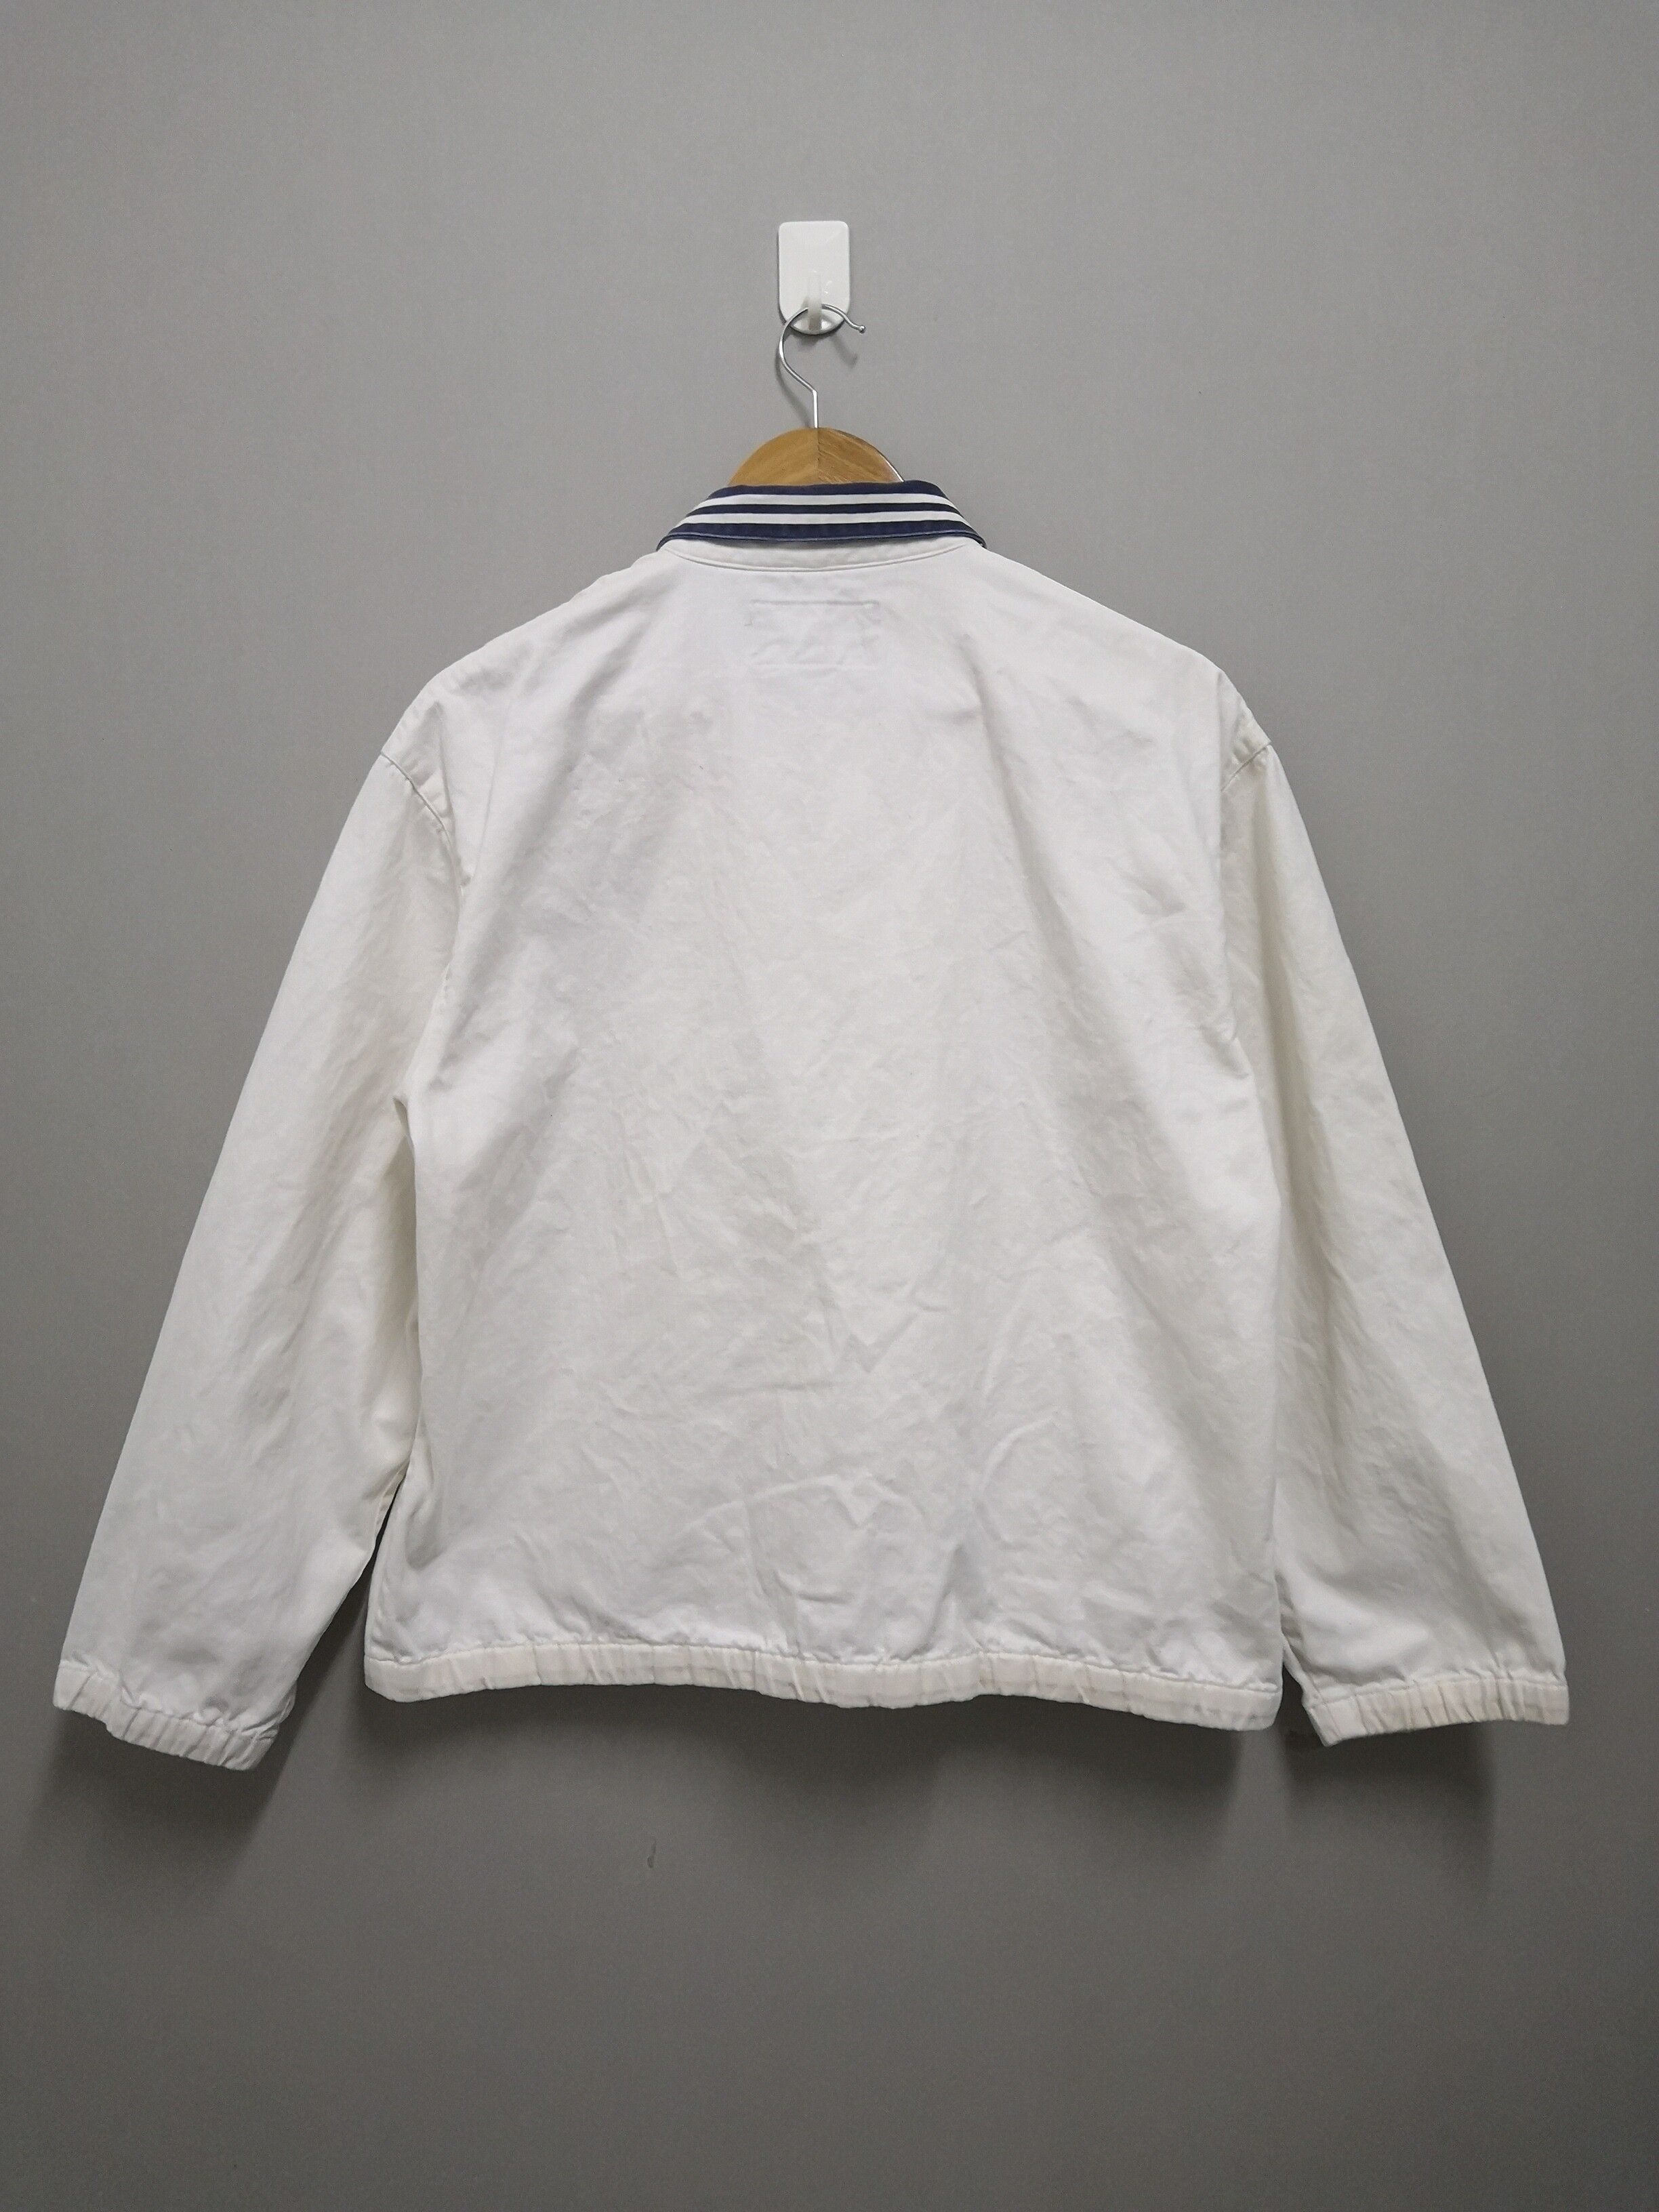 Vintage Polo Ralph Lauren USA Made Jacket - 2